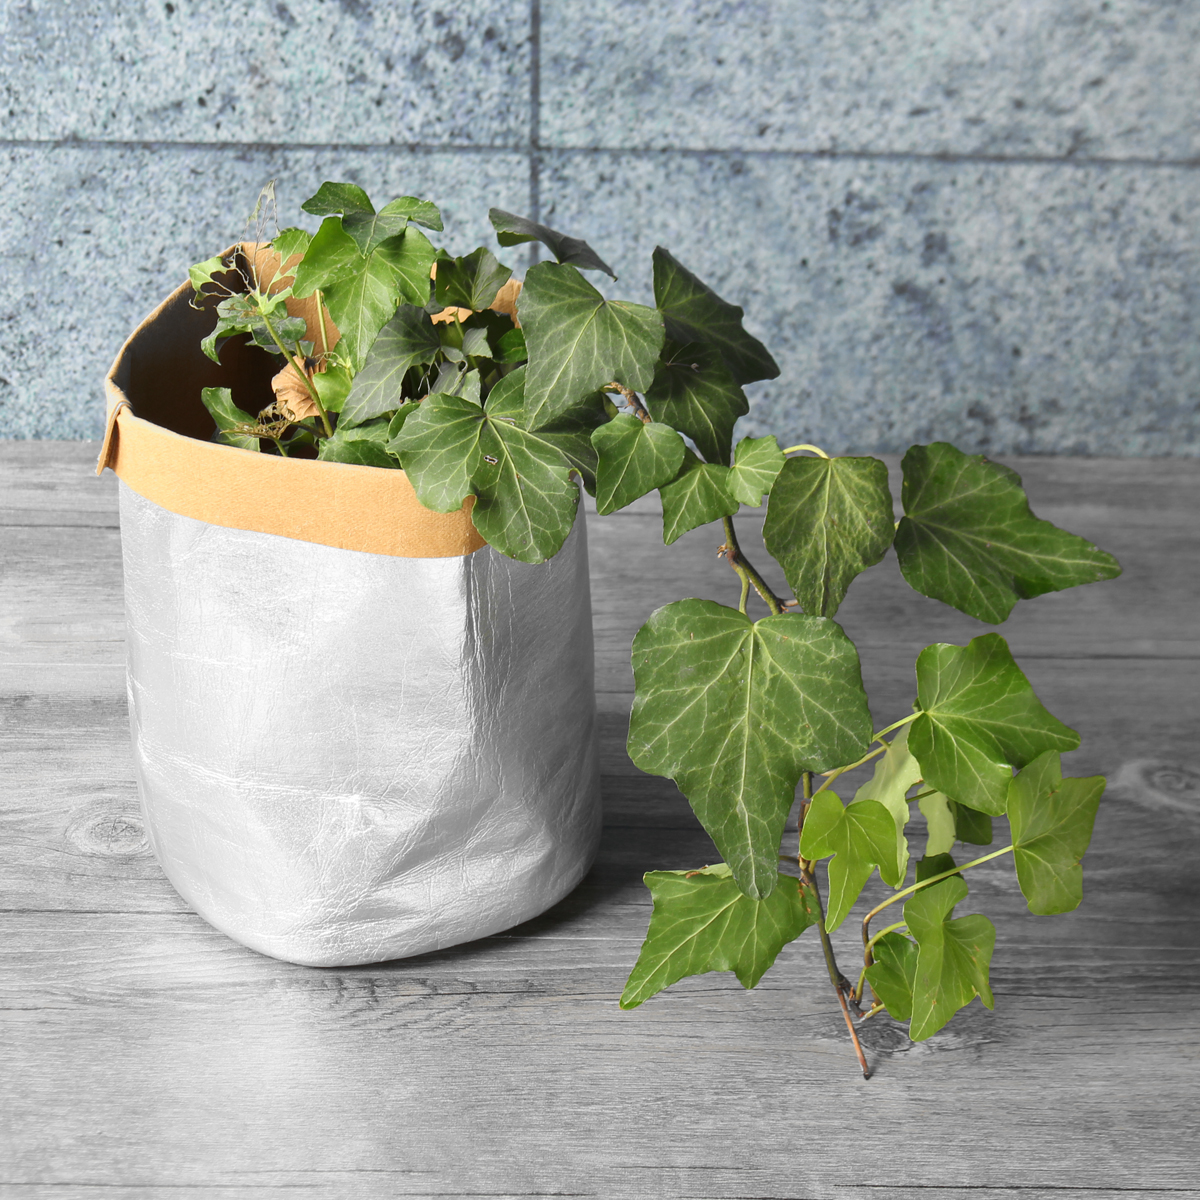 Gardening-Washable-Kraft-Paper-Bag-Plant-Flower-Pot-Multifunction-Home-Storage-Container-1302834-2